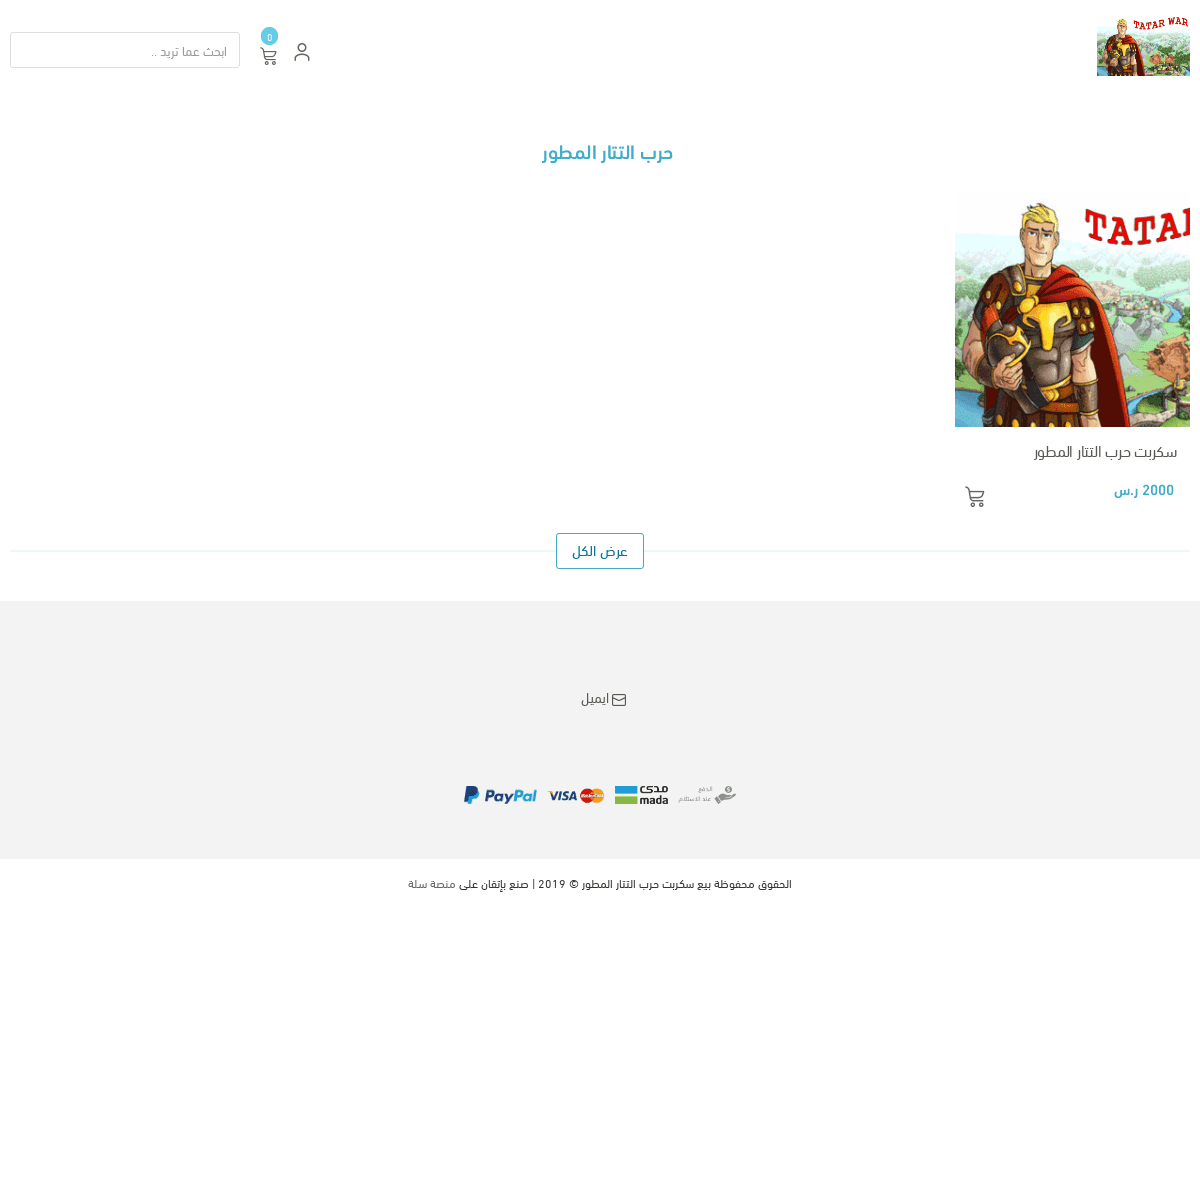 A complete backup of tatarp.com